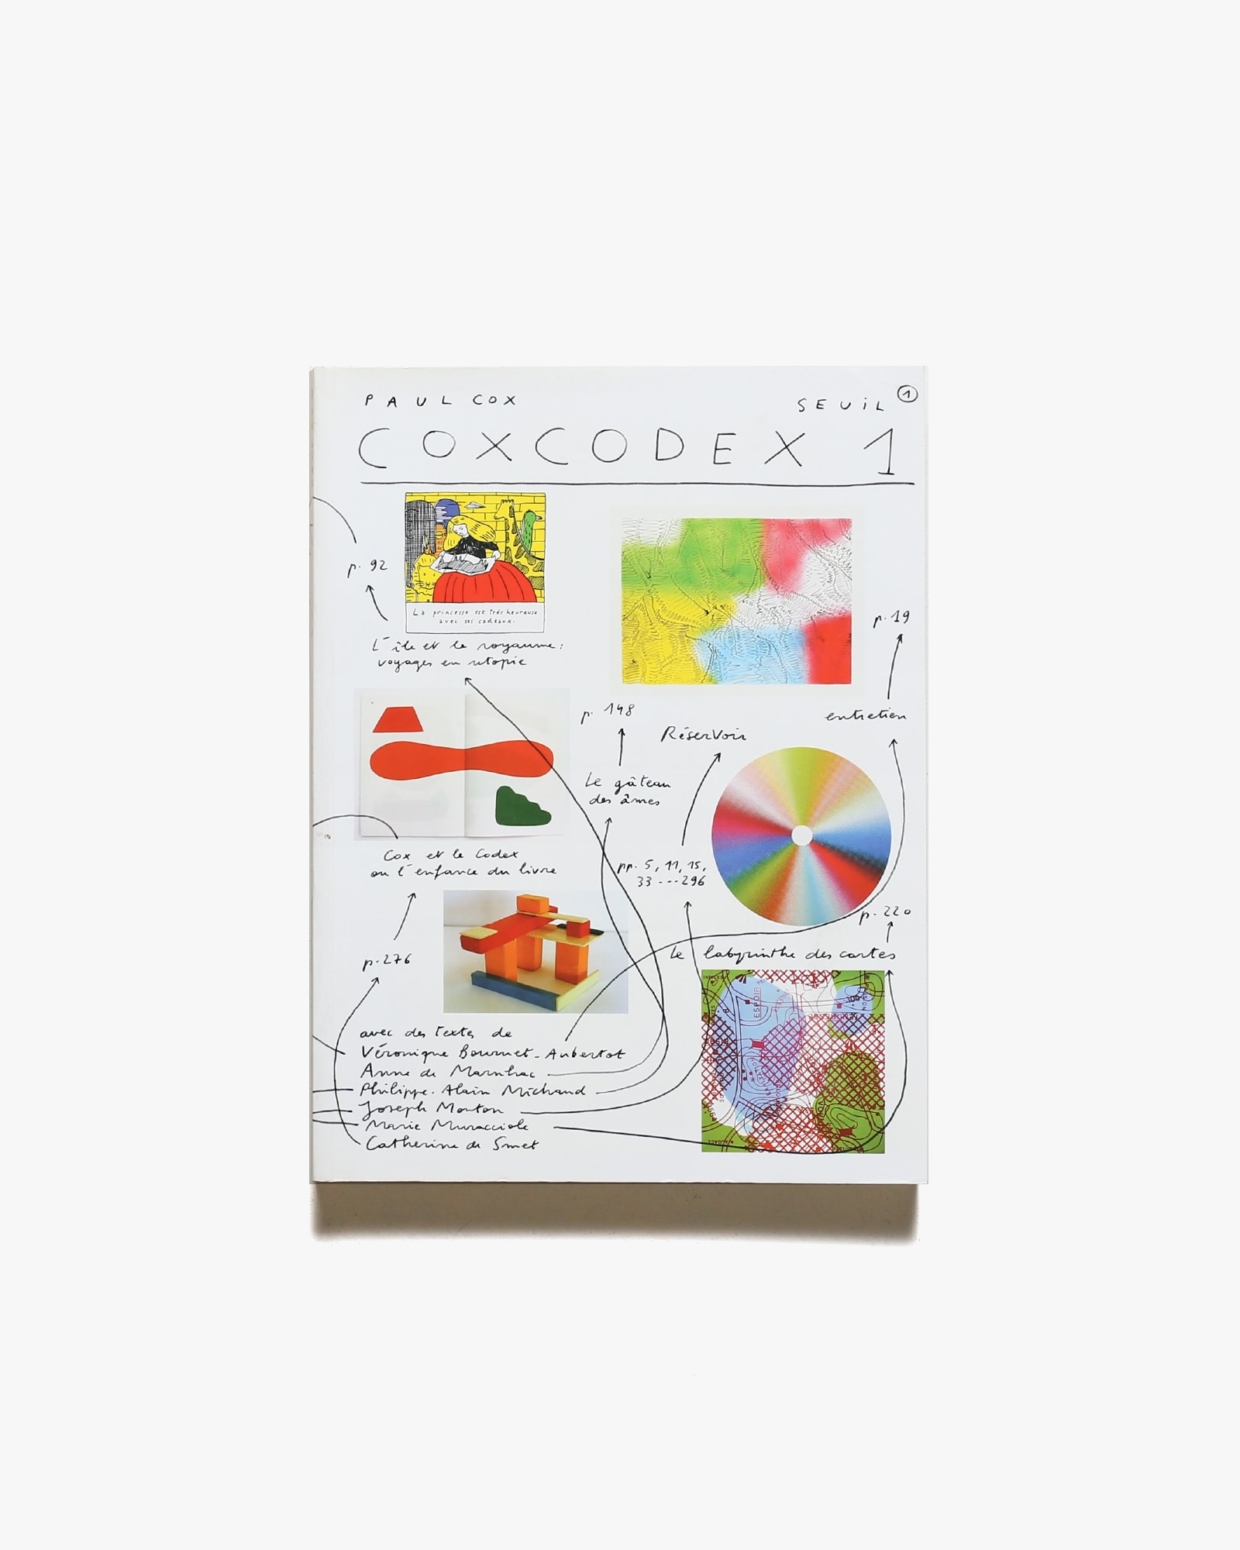 Coxcodex 1 / Paul Cox